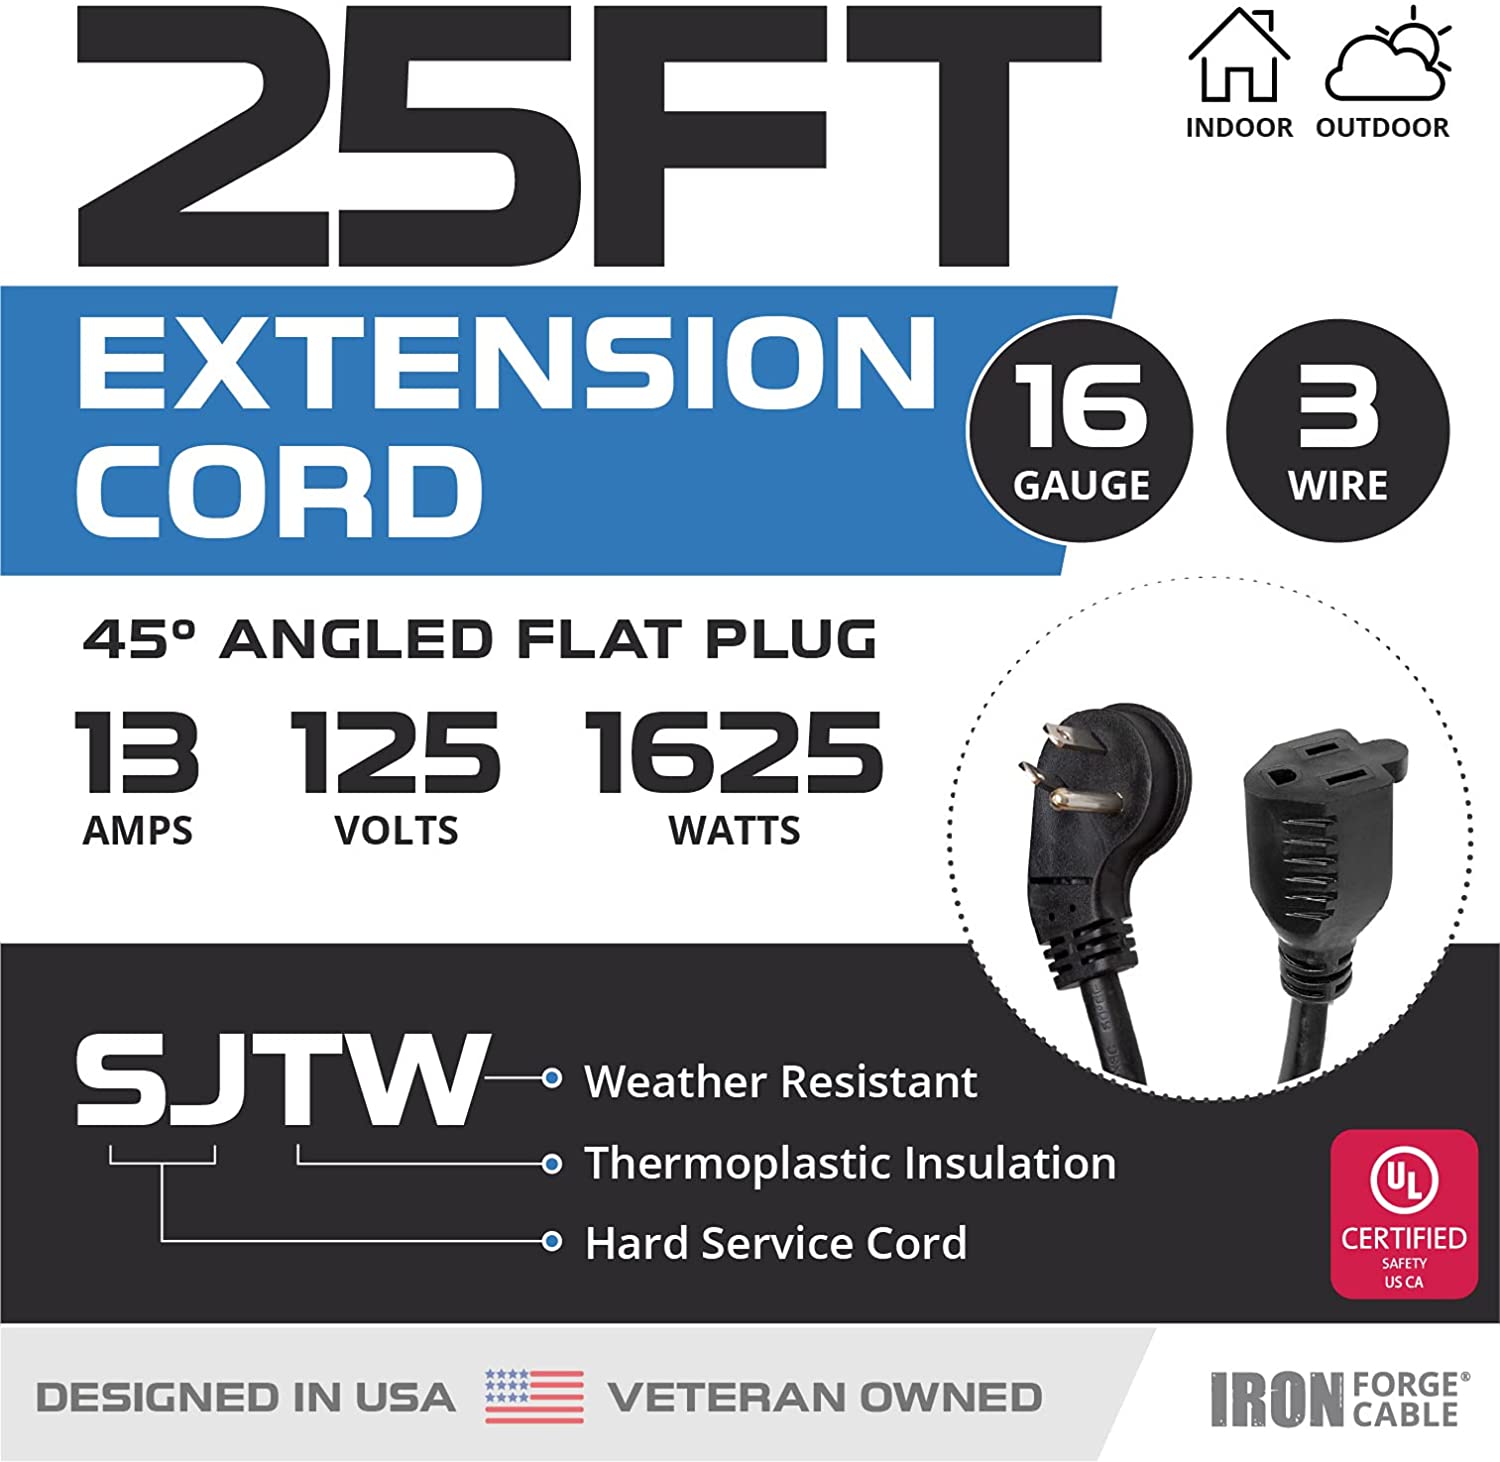 25 Ft Indoor Extension Cord with 45¬¨¬®‚Äö√†√ª Angled Flat Plug